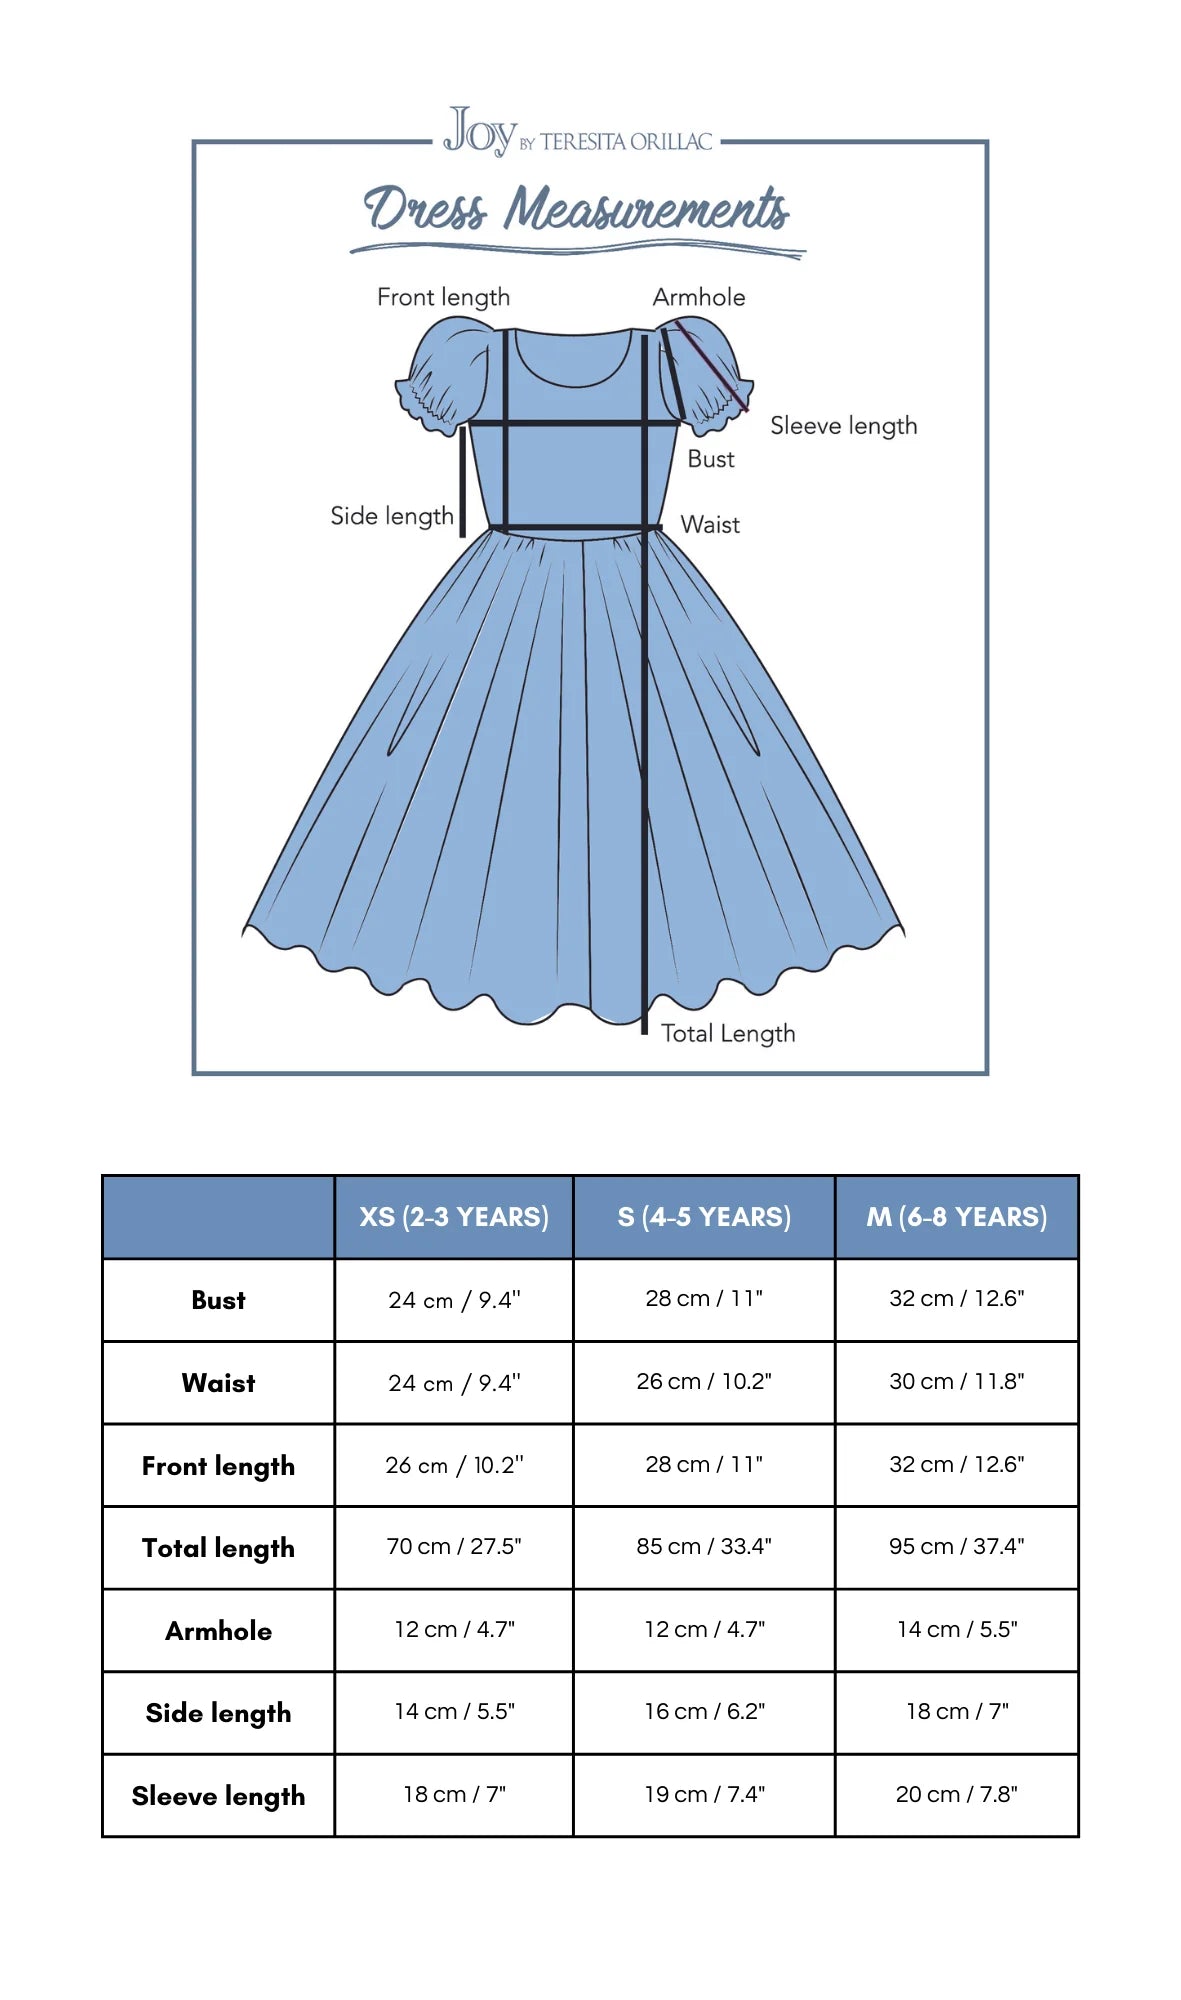 Joy - The Snowflake Queen Costume Dress